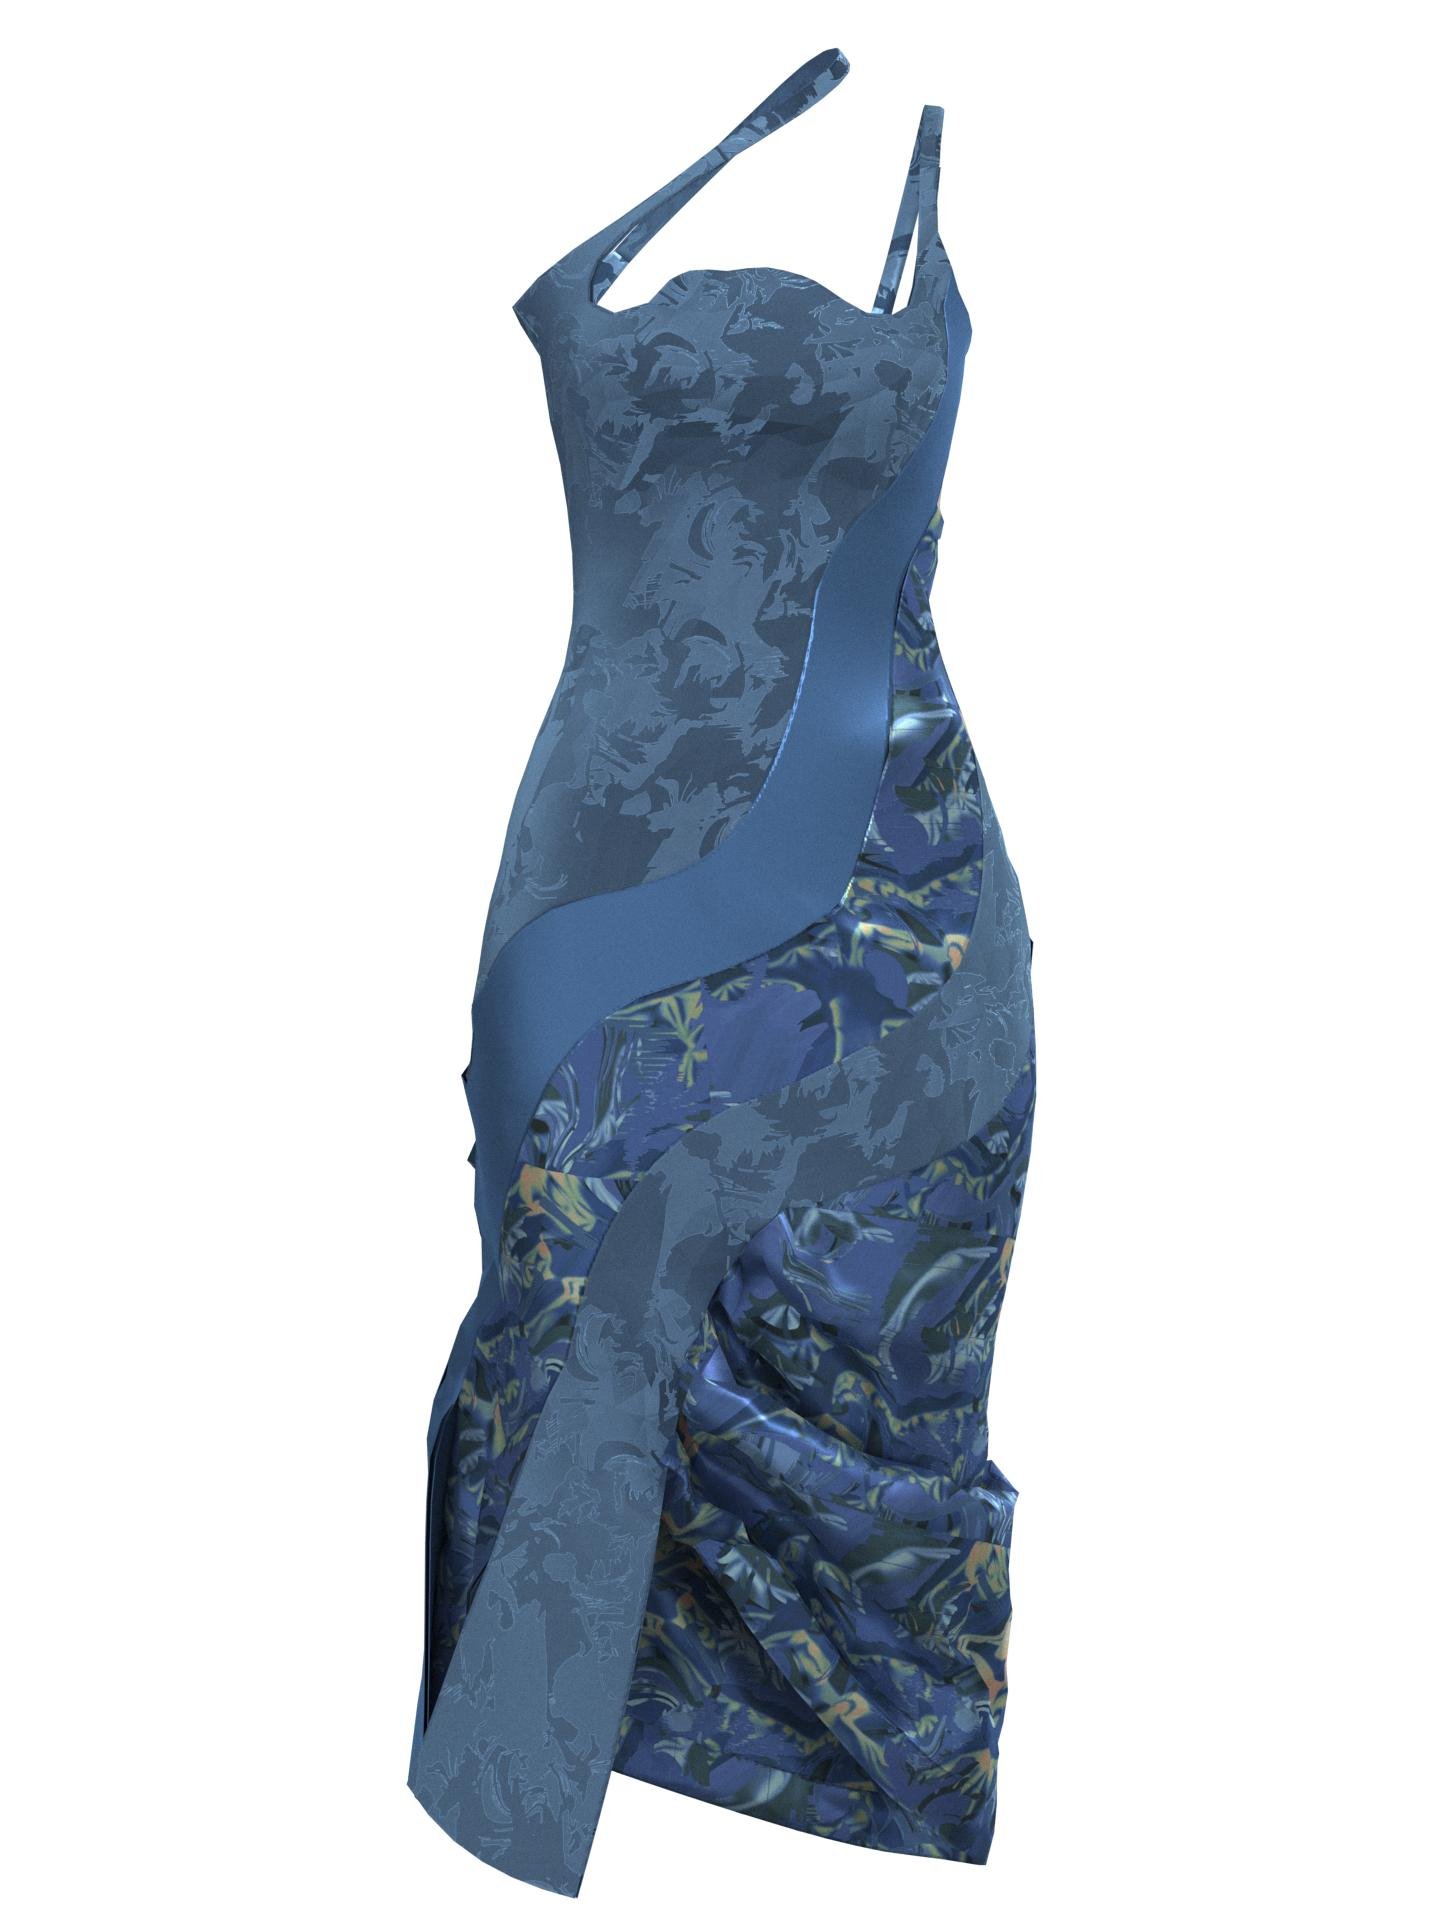 Pleiades Dress by RRY02